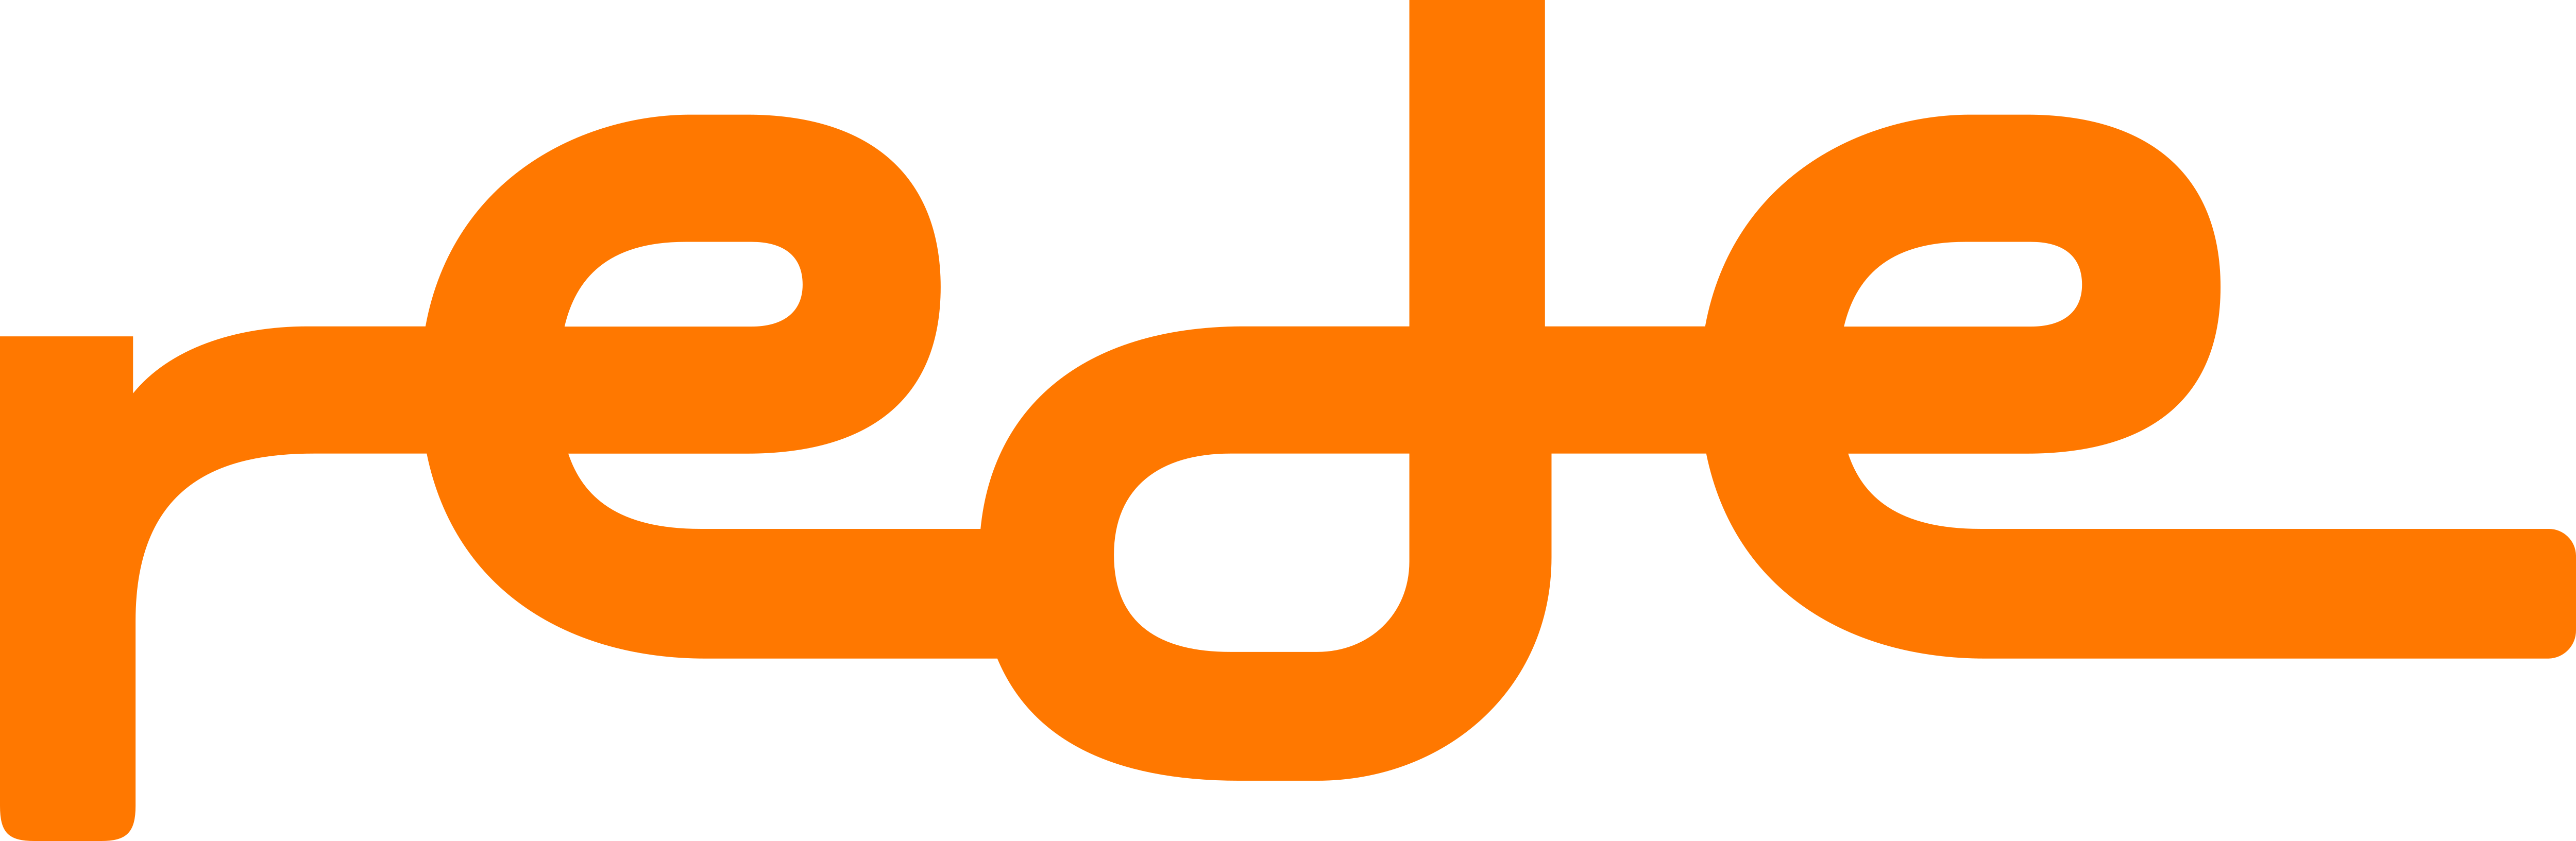 rede-logo